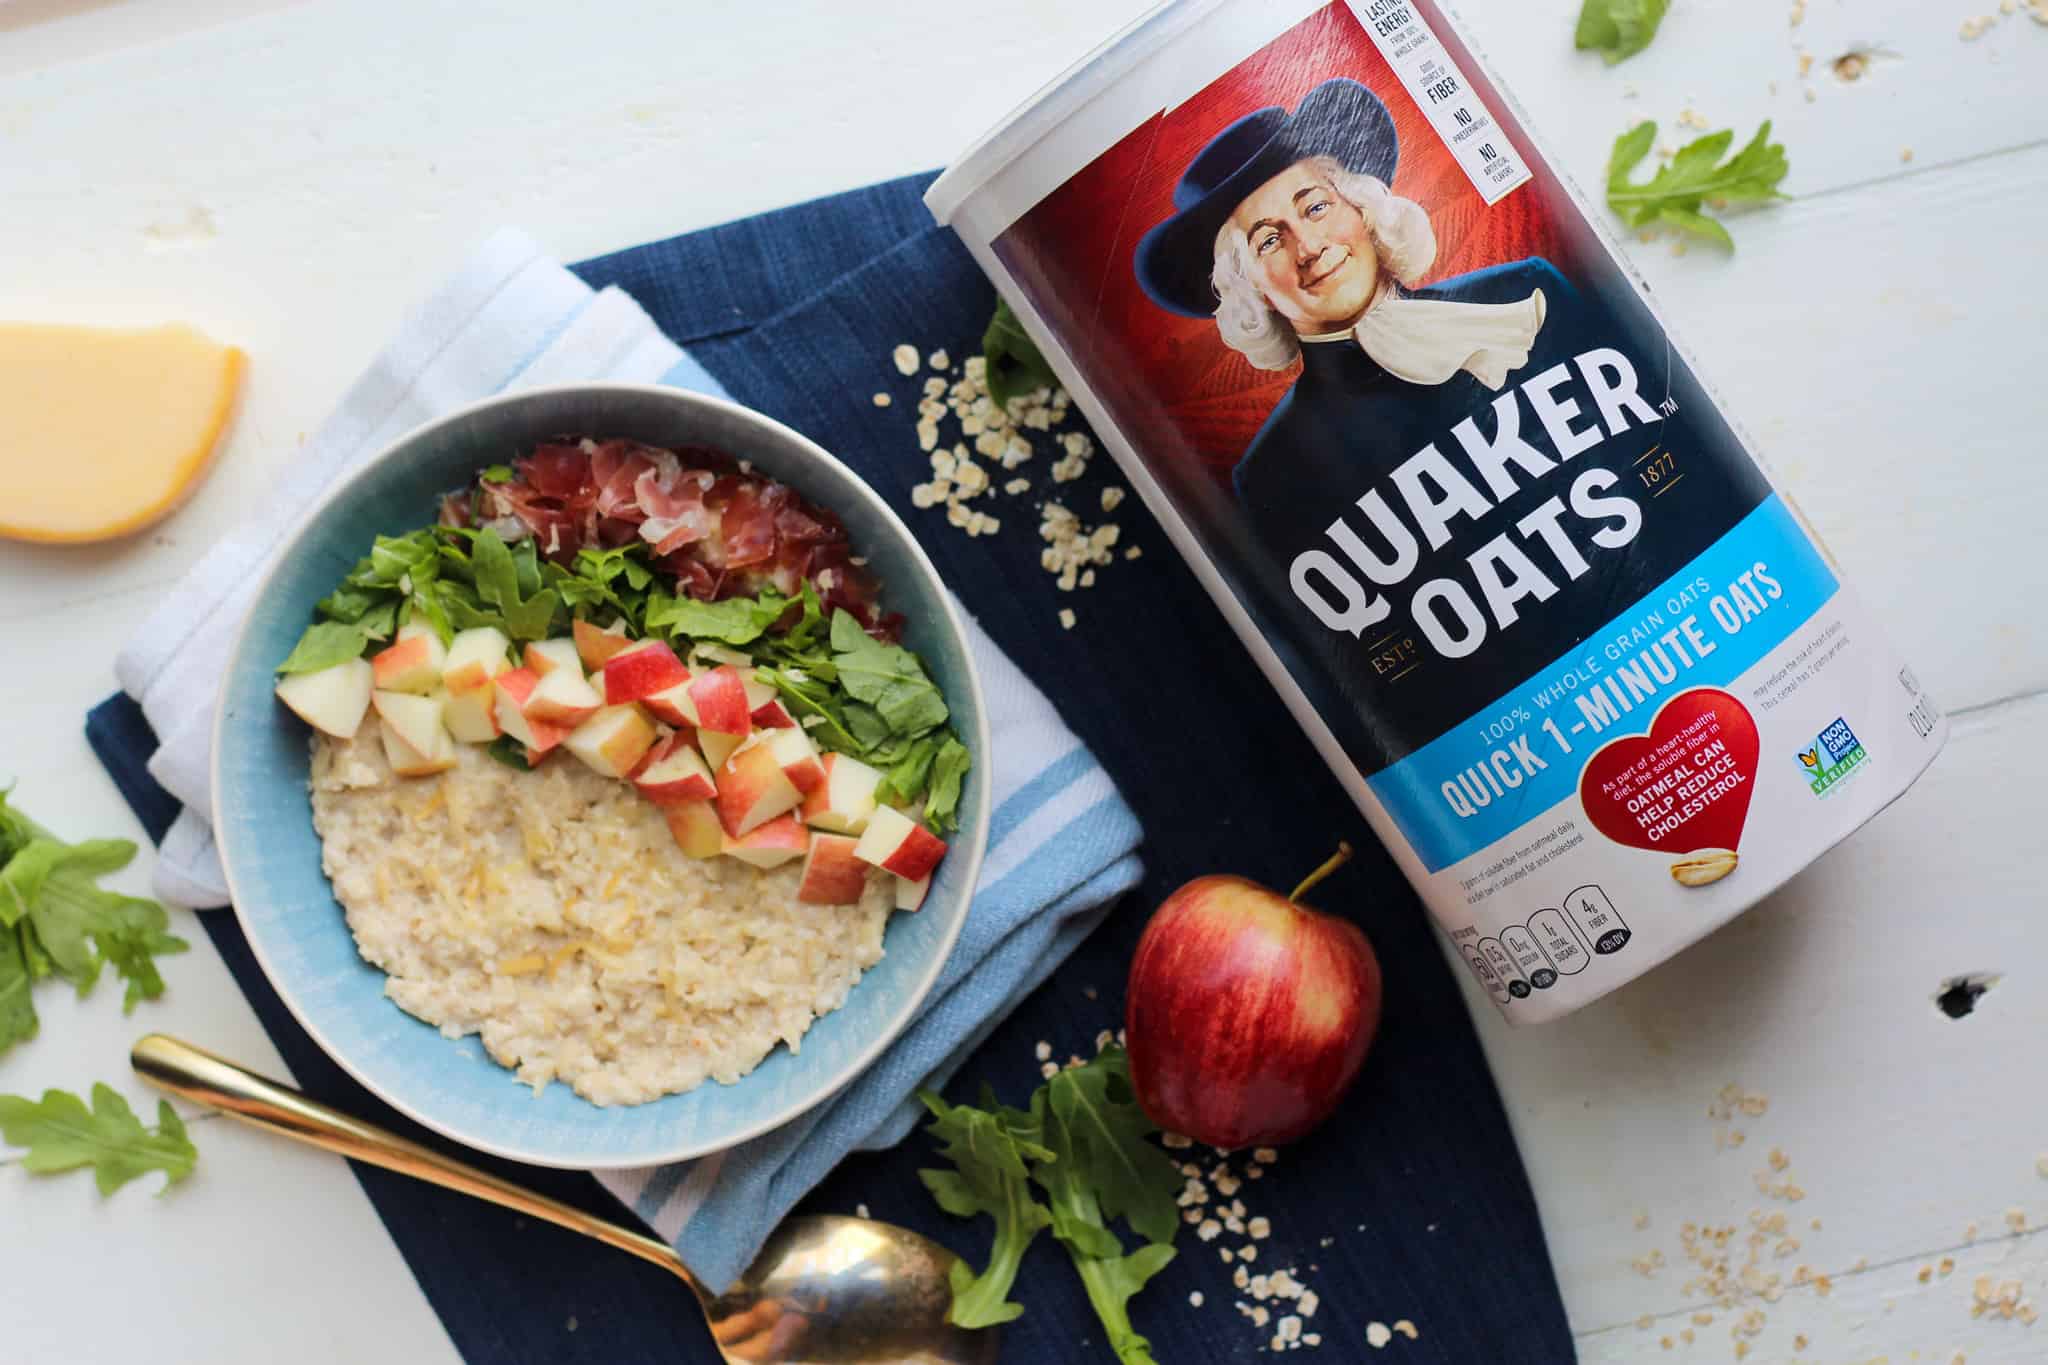 Quaker Oats Quick-1 Minute Oatmeal